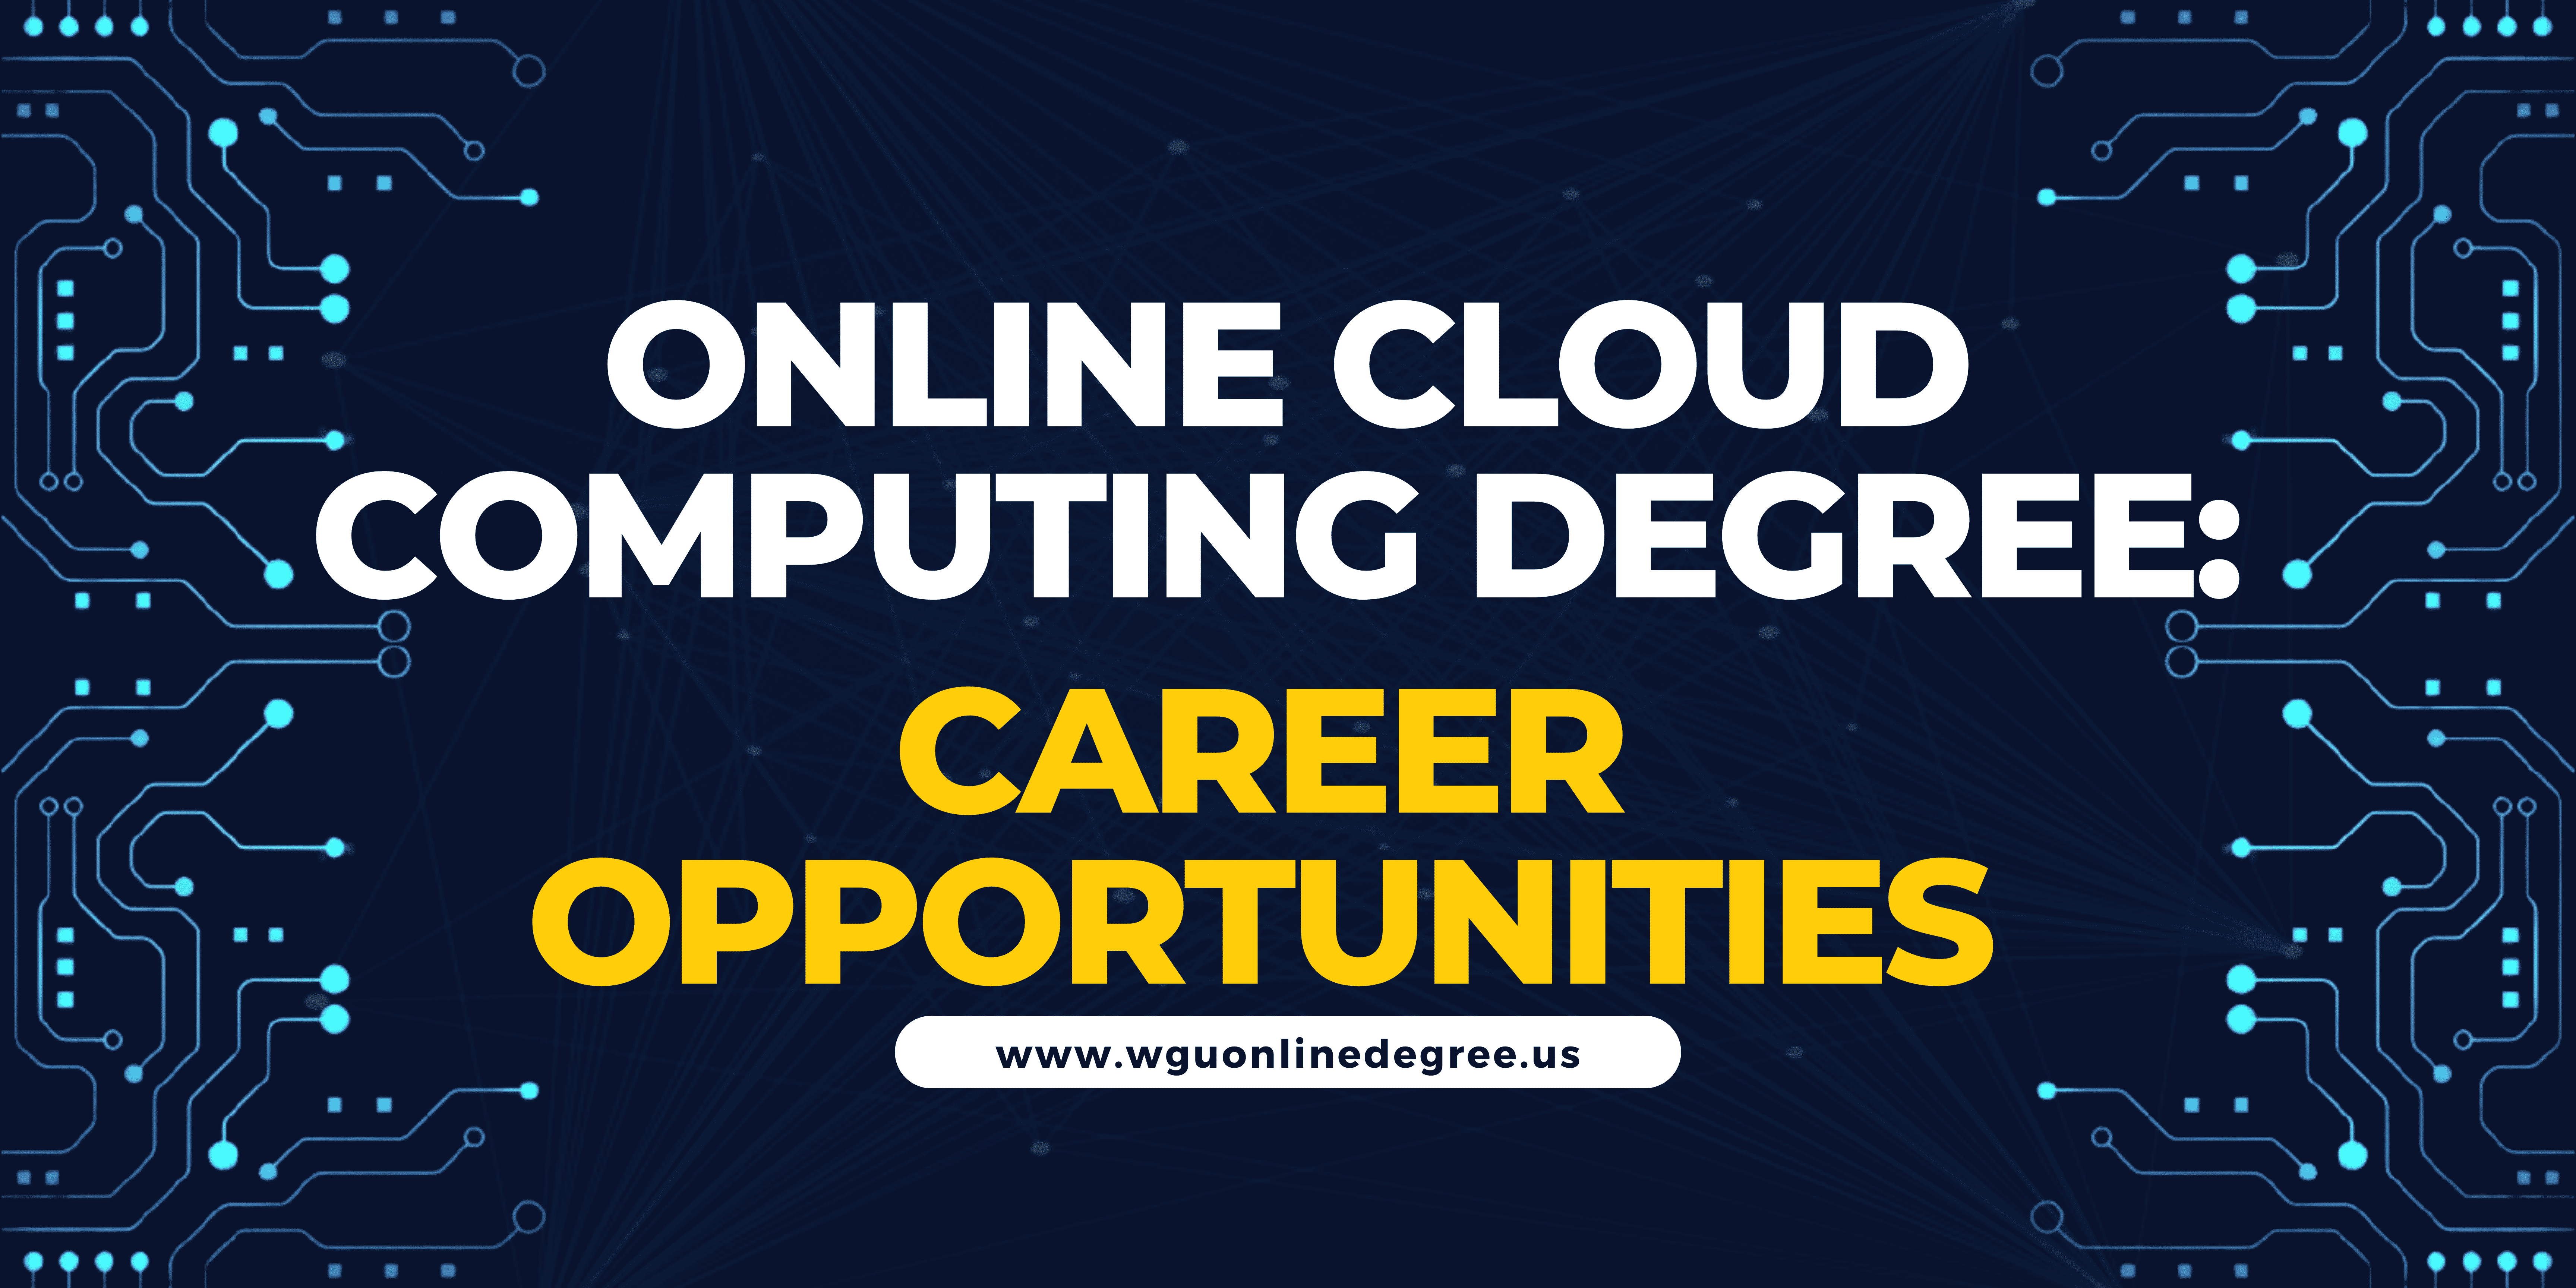 Online Cloud Computing Degree: Career Opportunities